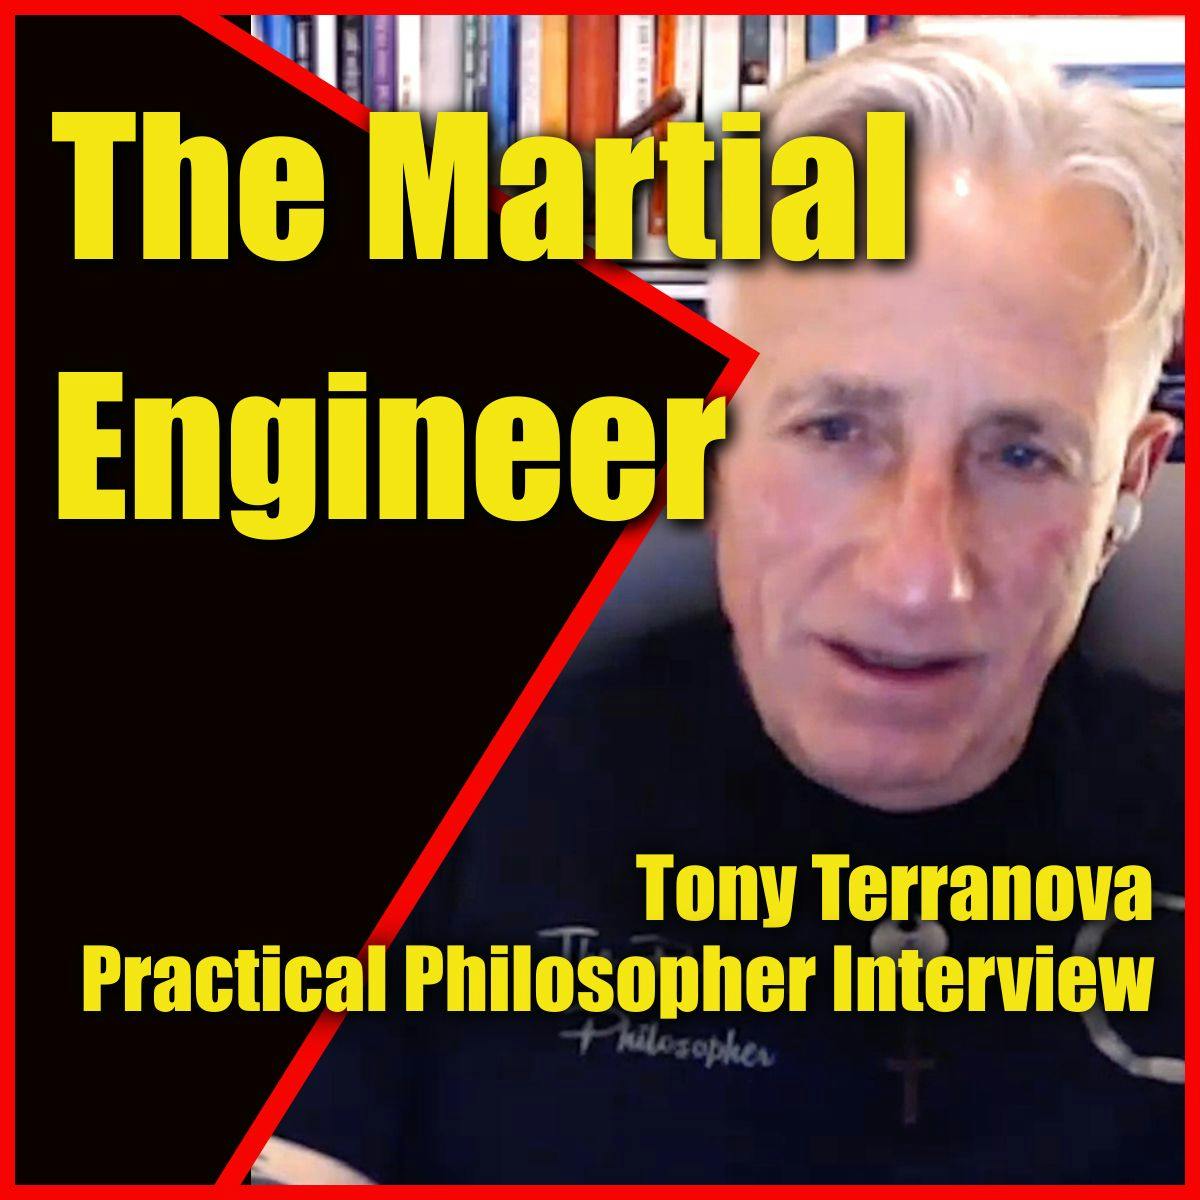 The Martial Engineer Tony Terranova the Practical Philosopher Interview